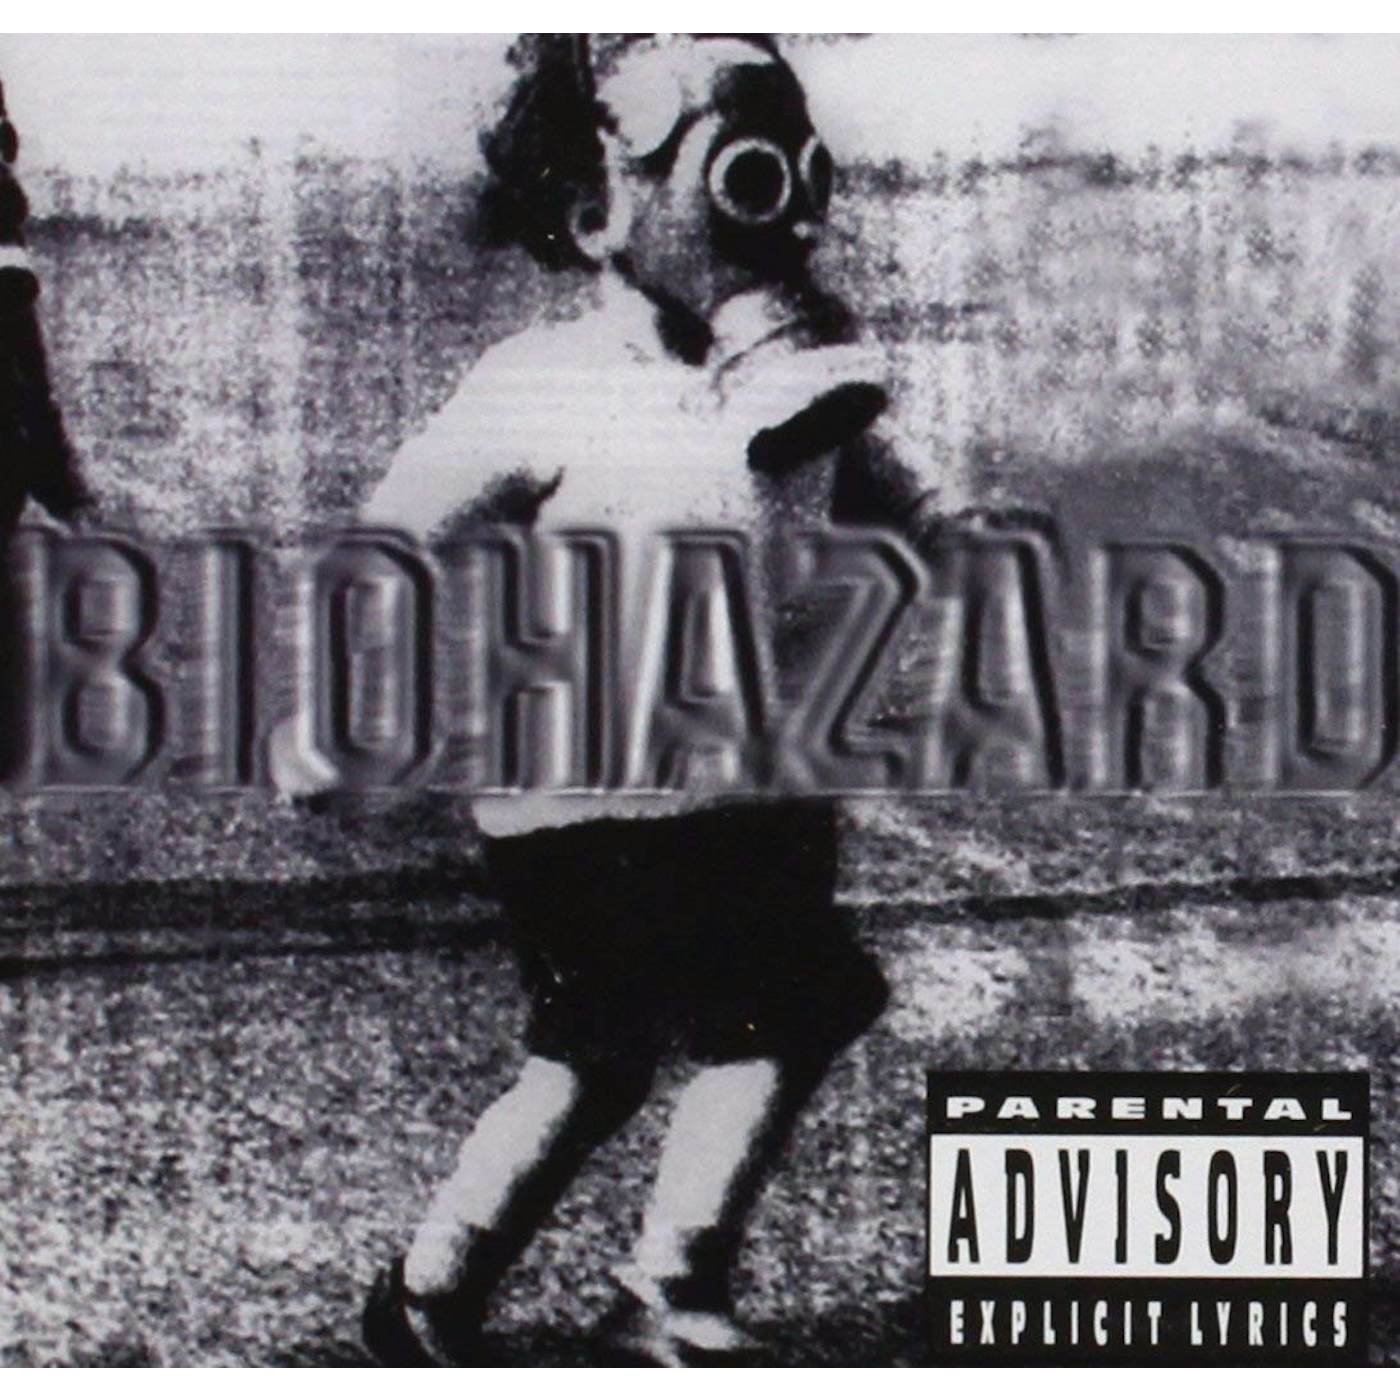 Biohazard - State of the World